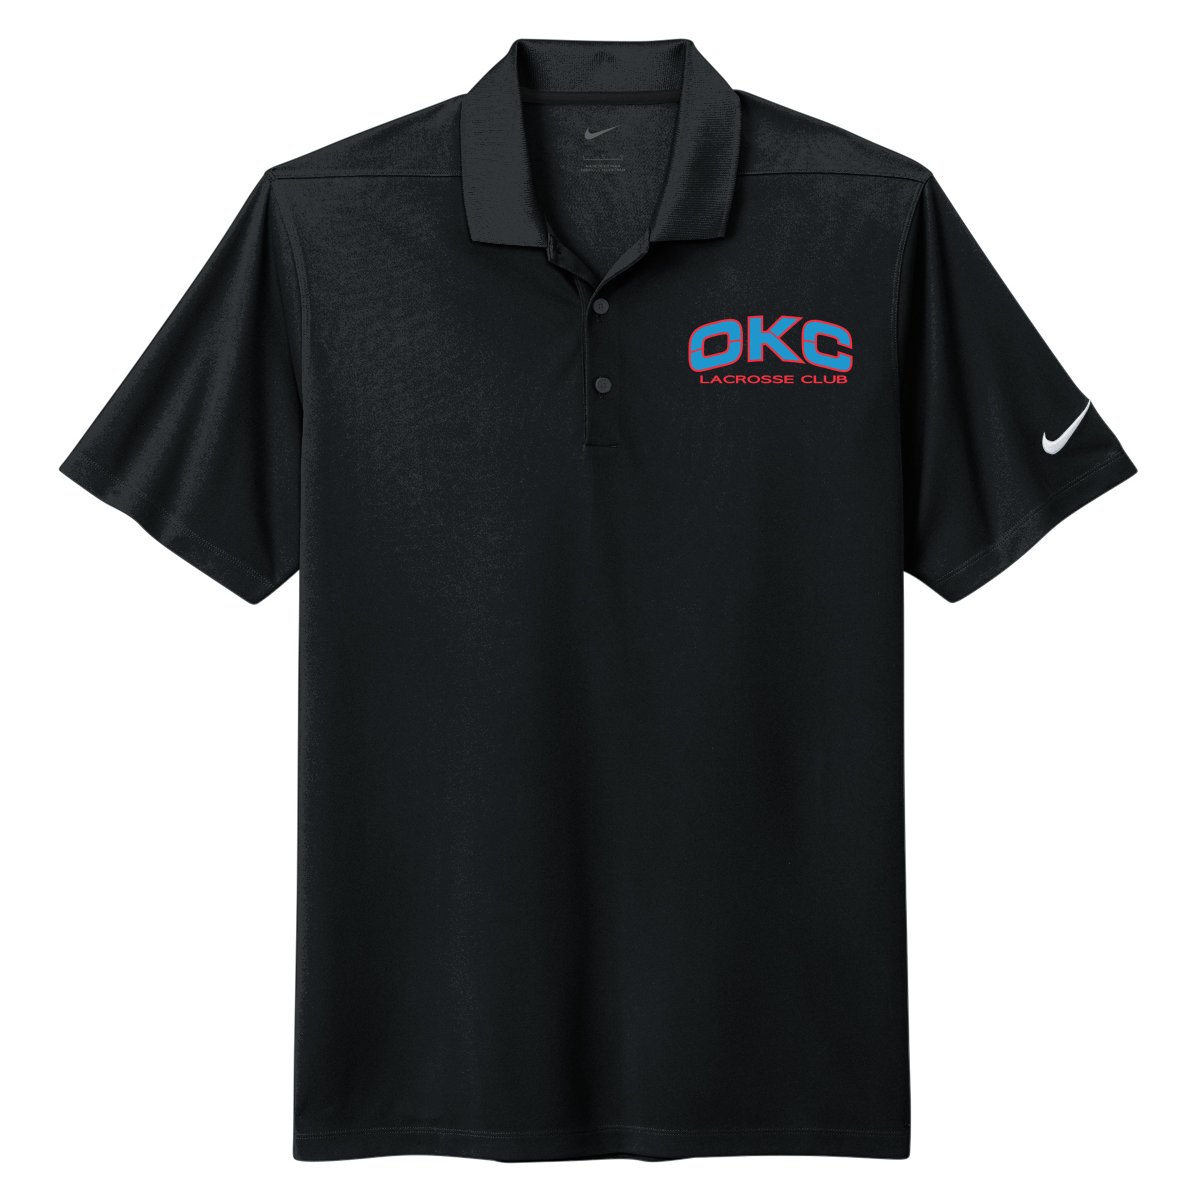 OKC Lacrosse Club Nike Dri-FIT Polo